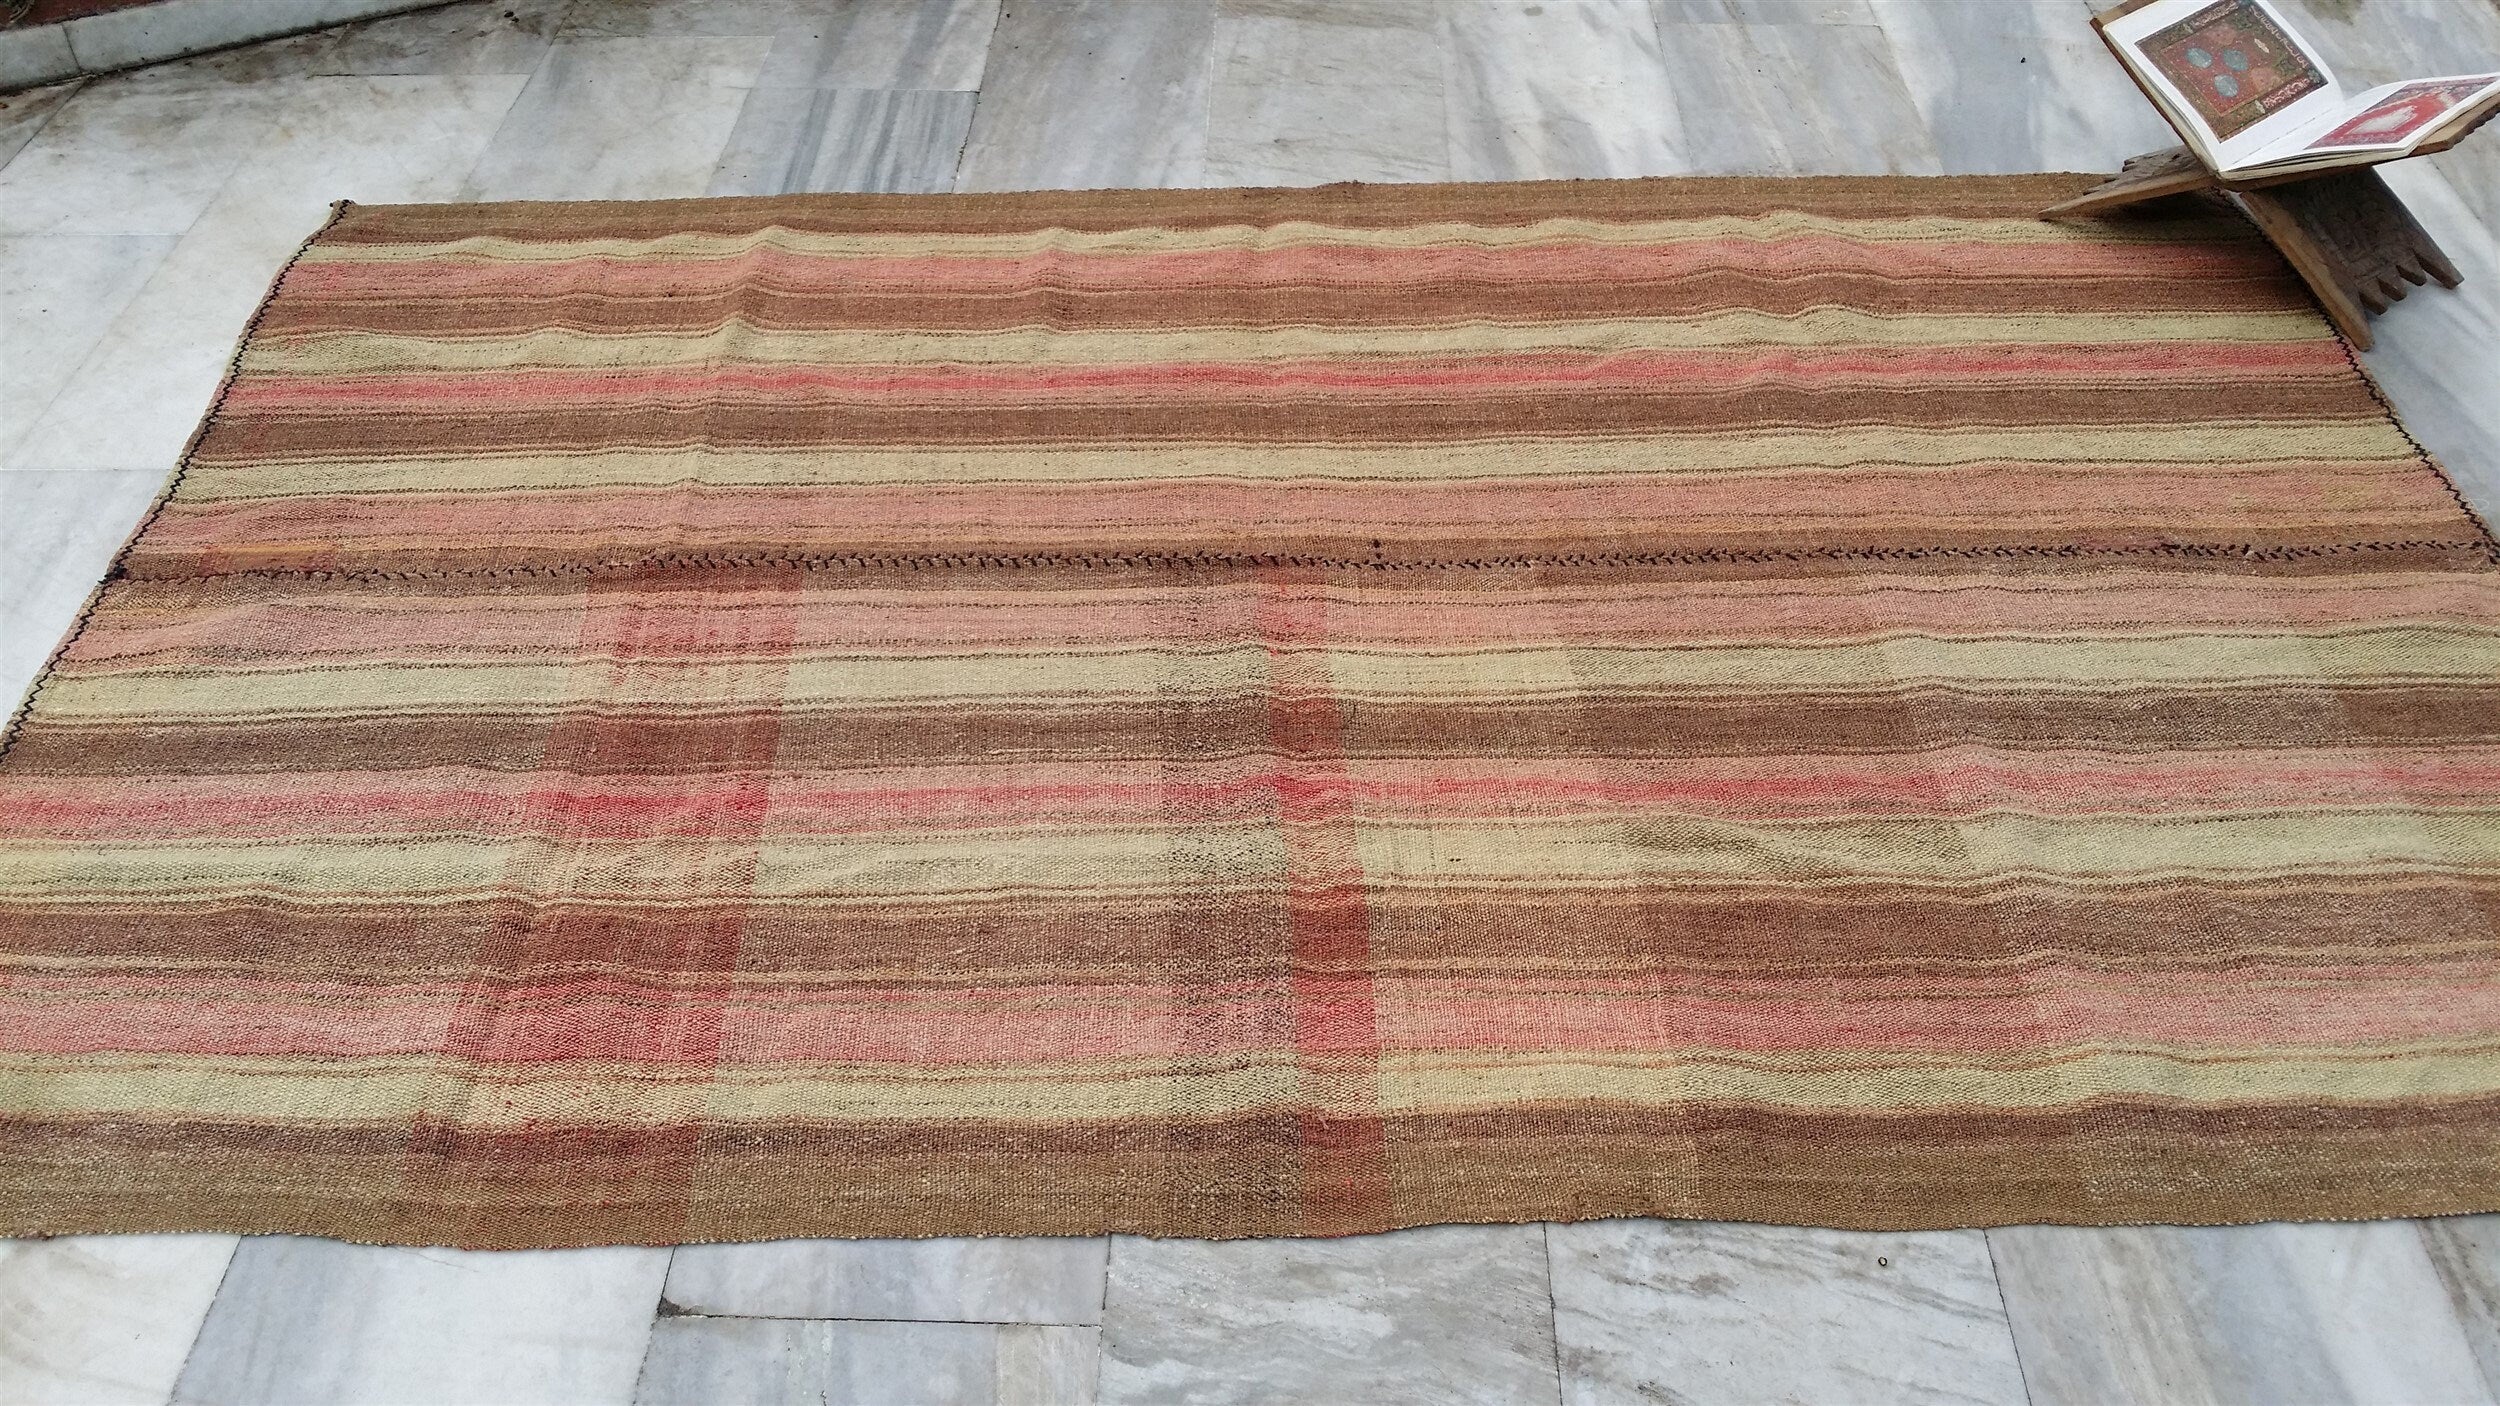 Turkish Kilim Rug, Handmade Organic Wool Rug, Tribal Nomadic Moroccan Carpet Bohemian Living Room Rustic Decor Persian Area Rug 7'3"x4'9"